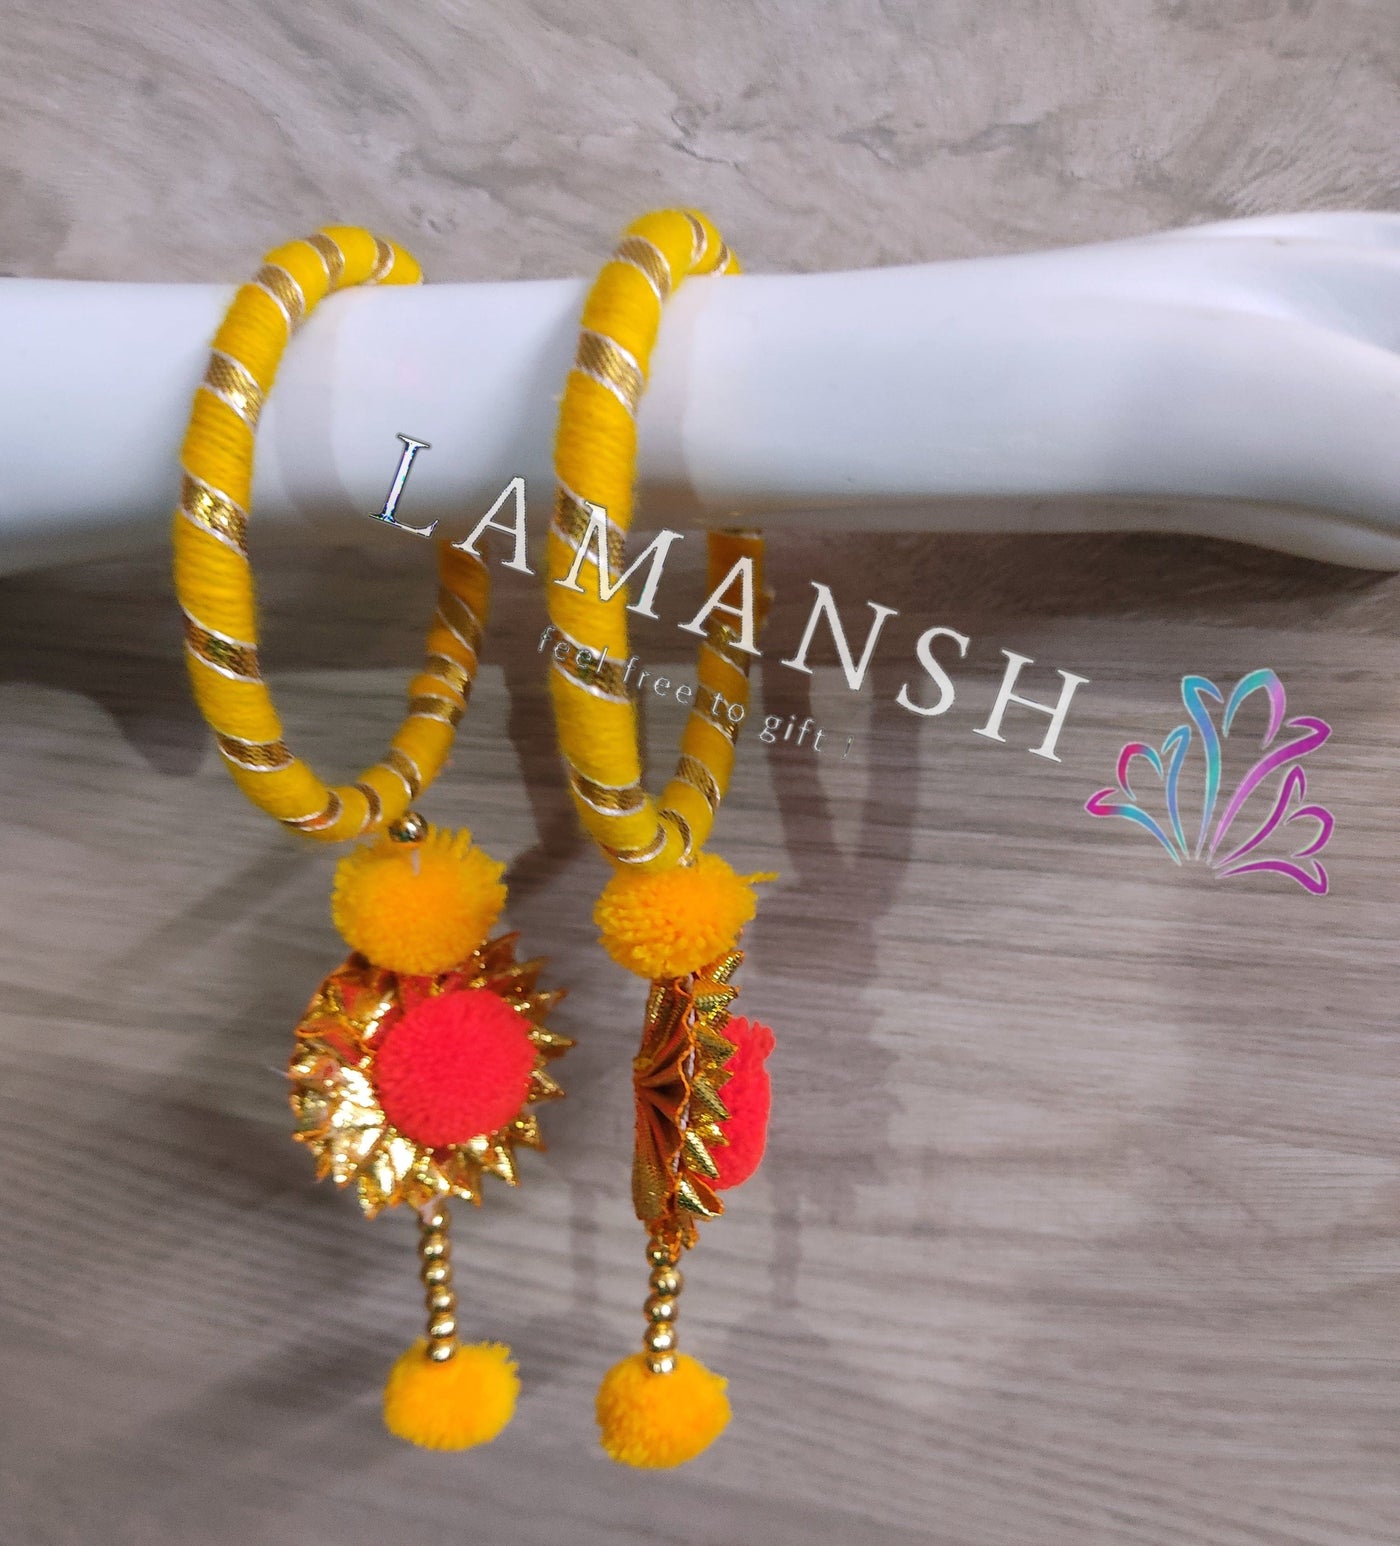 LAMANSH Gota chudi bangles Assorted mix colors / 40 Bangles set LAMANSH® Set of 40 Gota Kade Bangle/Bracelets/ Haldi Favours for guests / Pom Pom Favors for bridesmaid